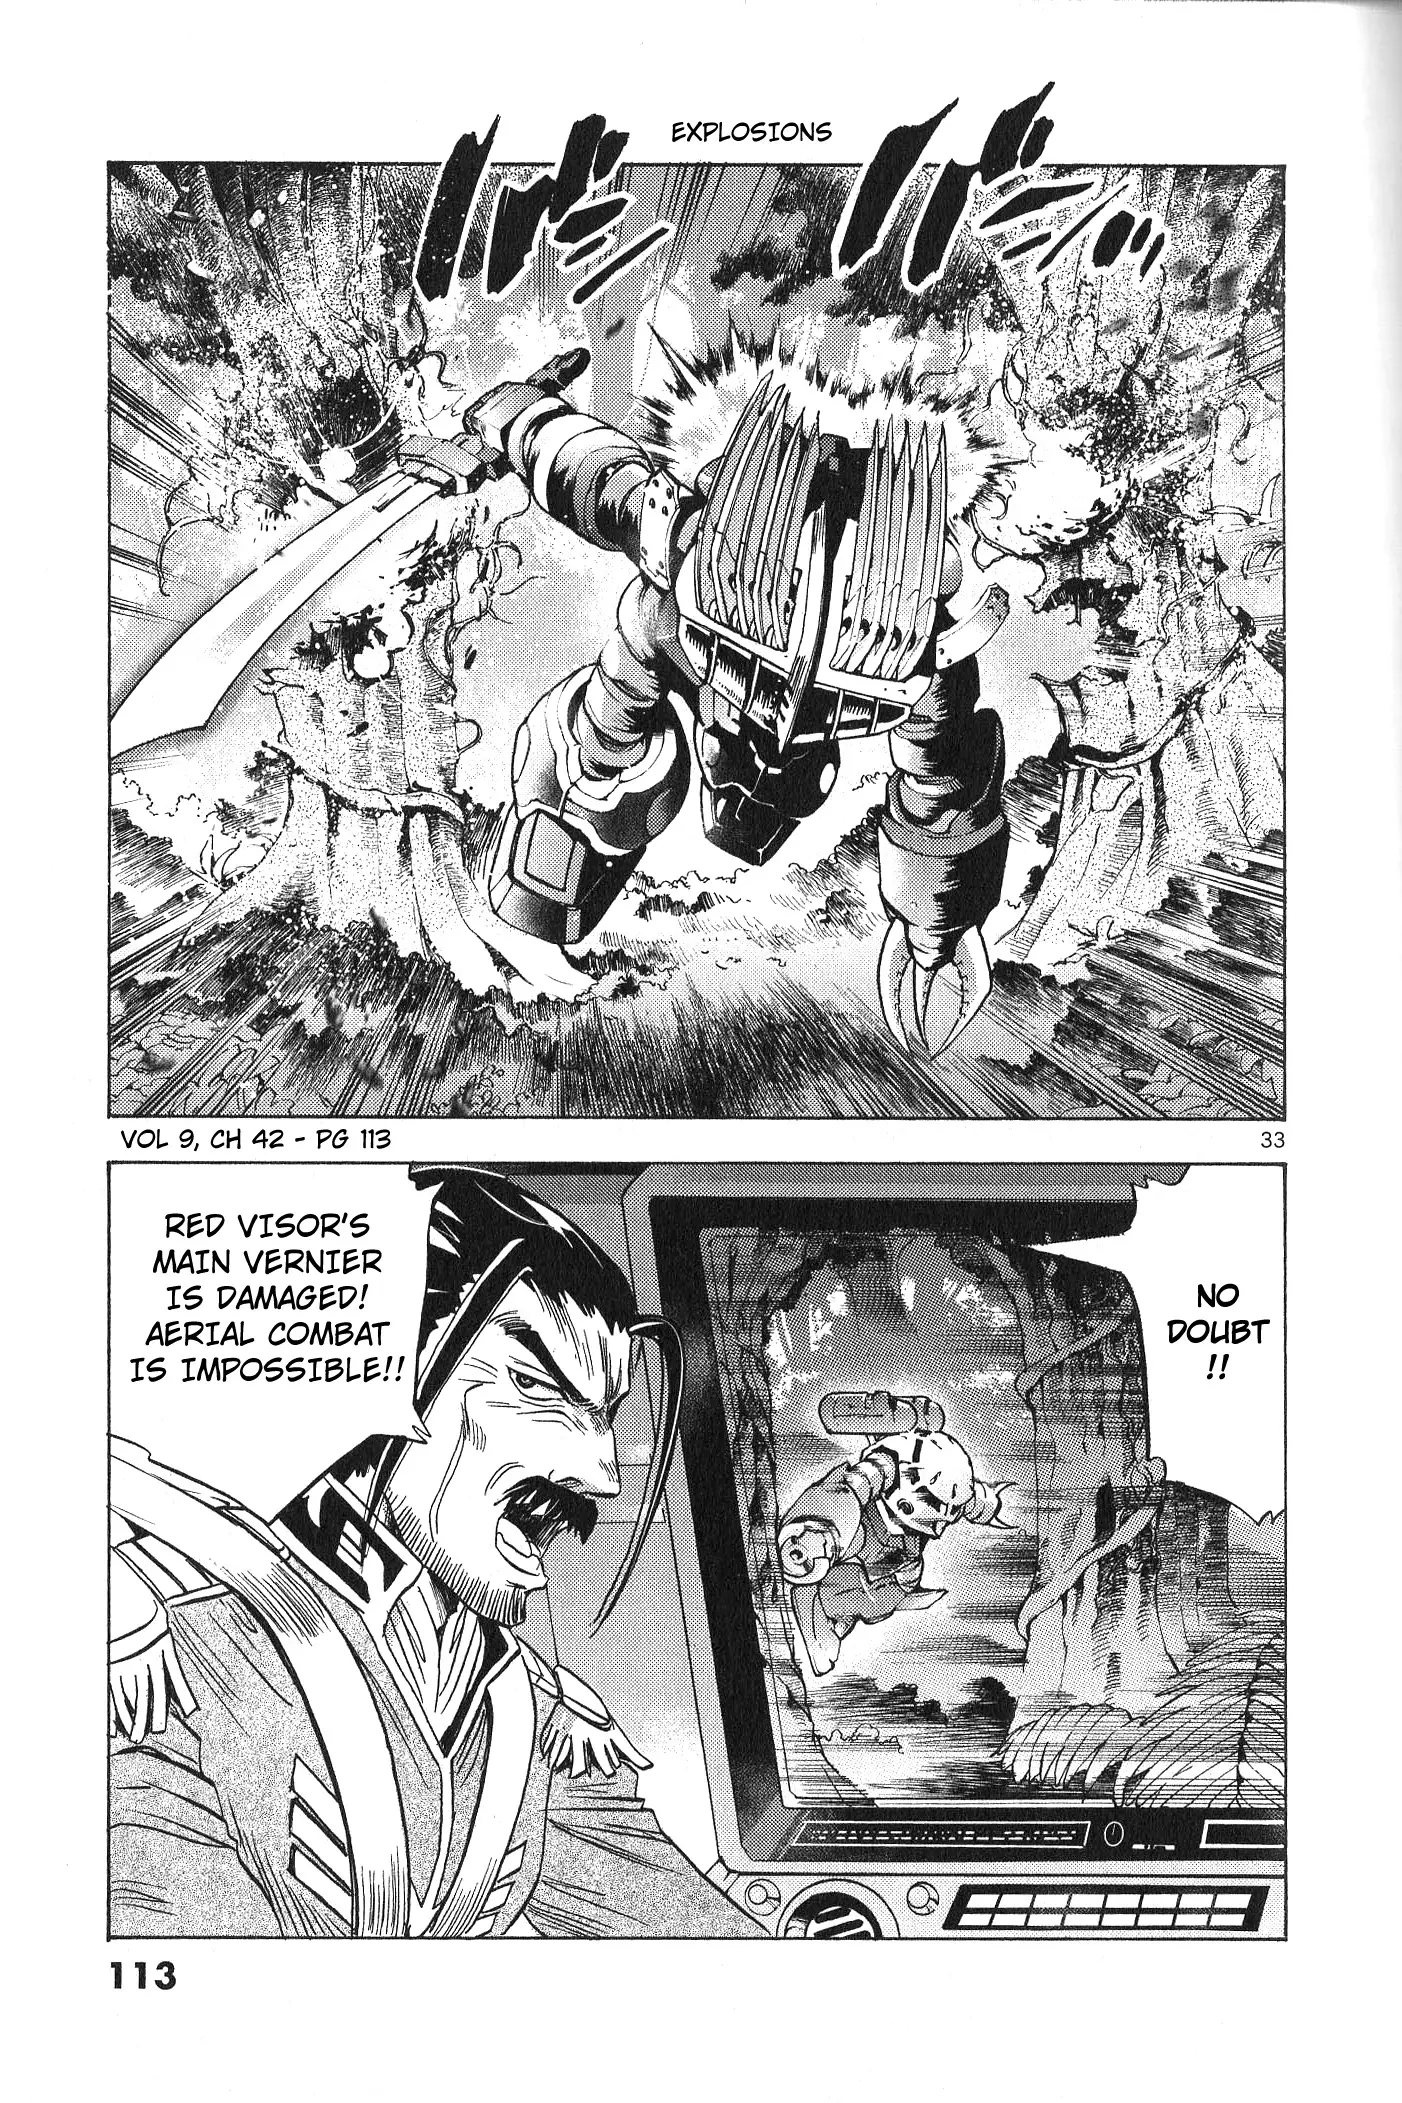 Mobile Suit Gundam Aggressor - 42 page 29-00728c00